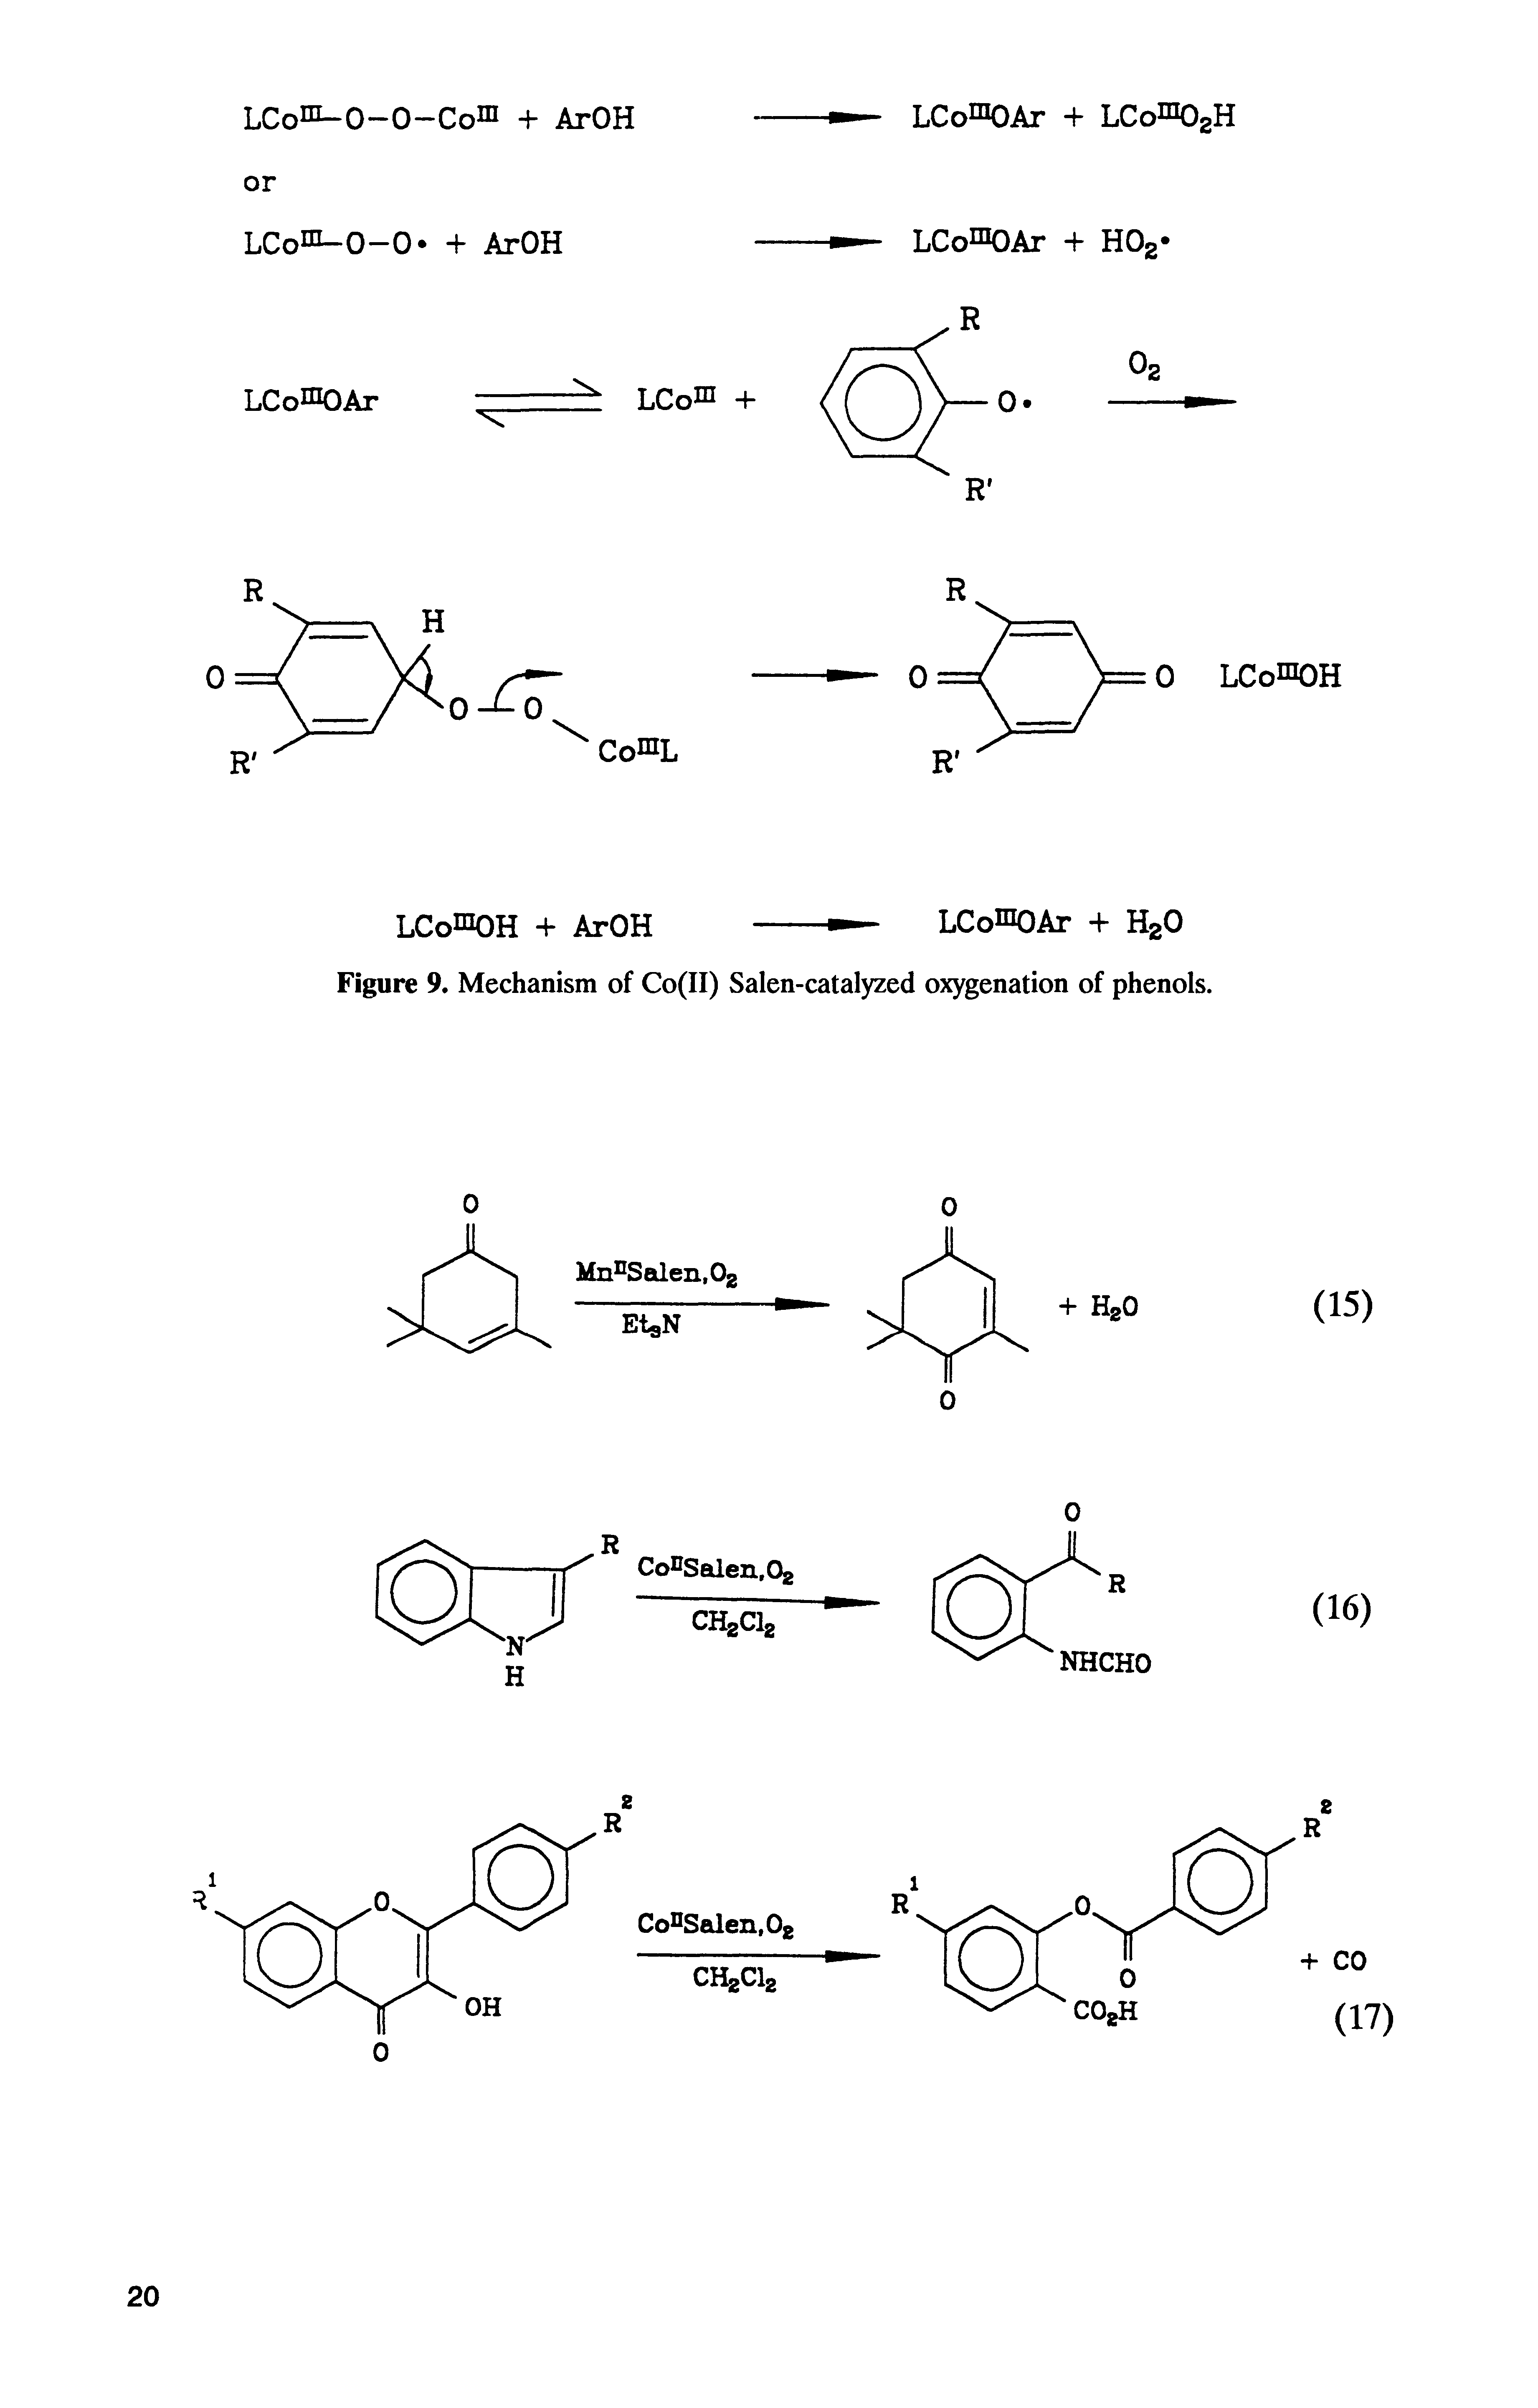 Figure 9. Mechanism of Co(II) Salen-catalyzed oxygenation of phenols.